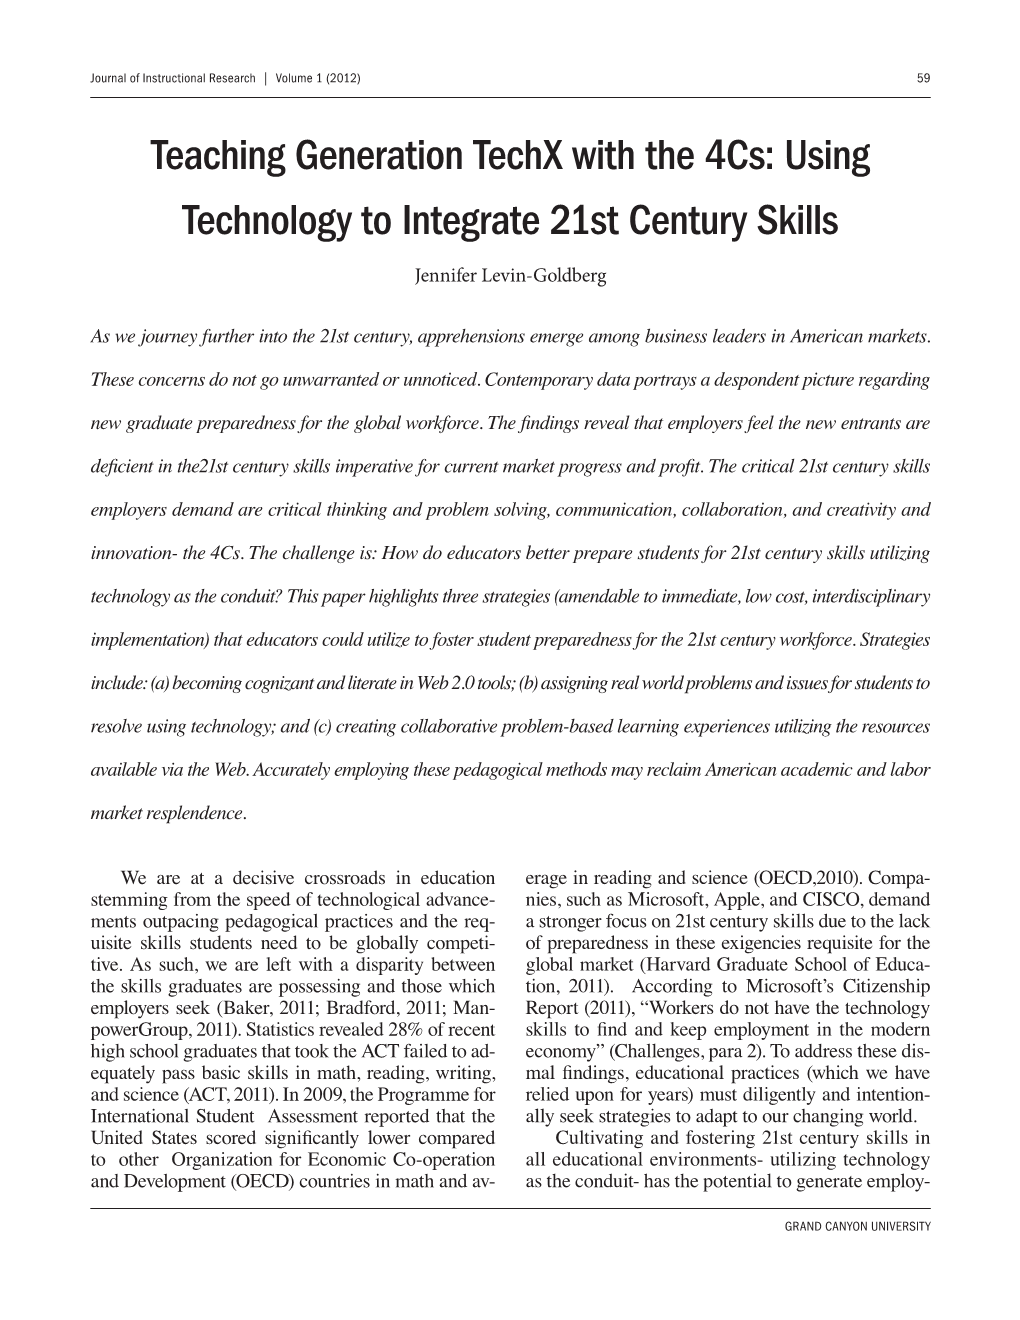 Teaching Generation Techx with the 4Cs: Using Technology to Integrate 21St Century Skills